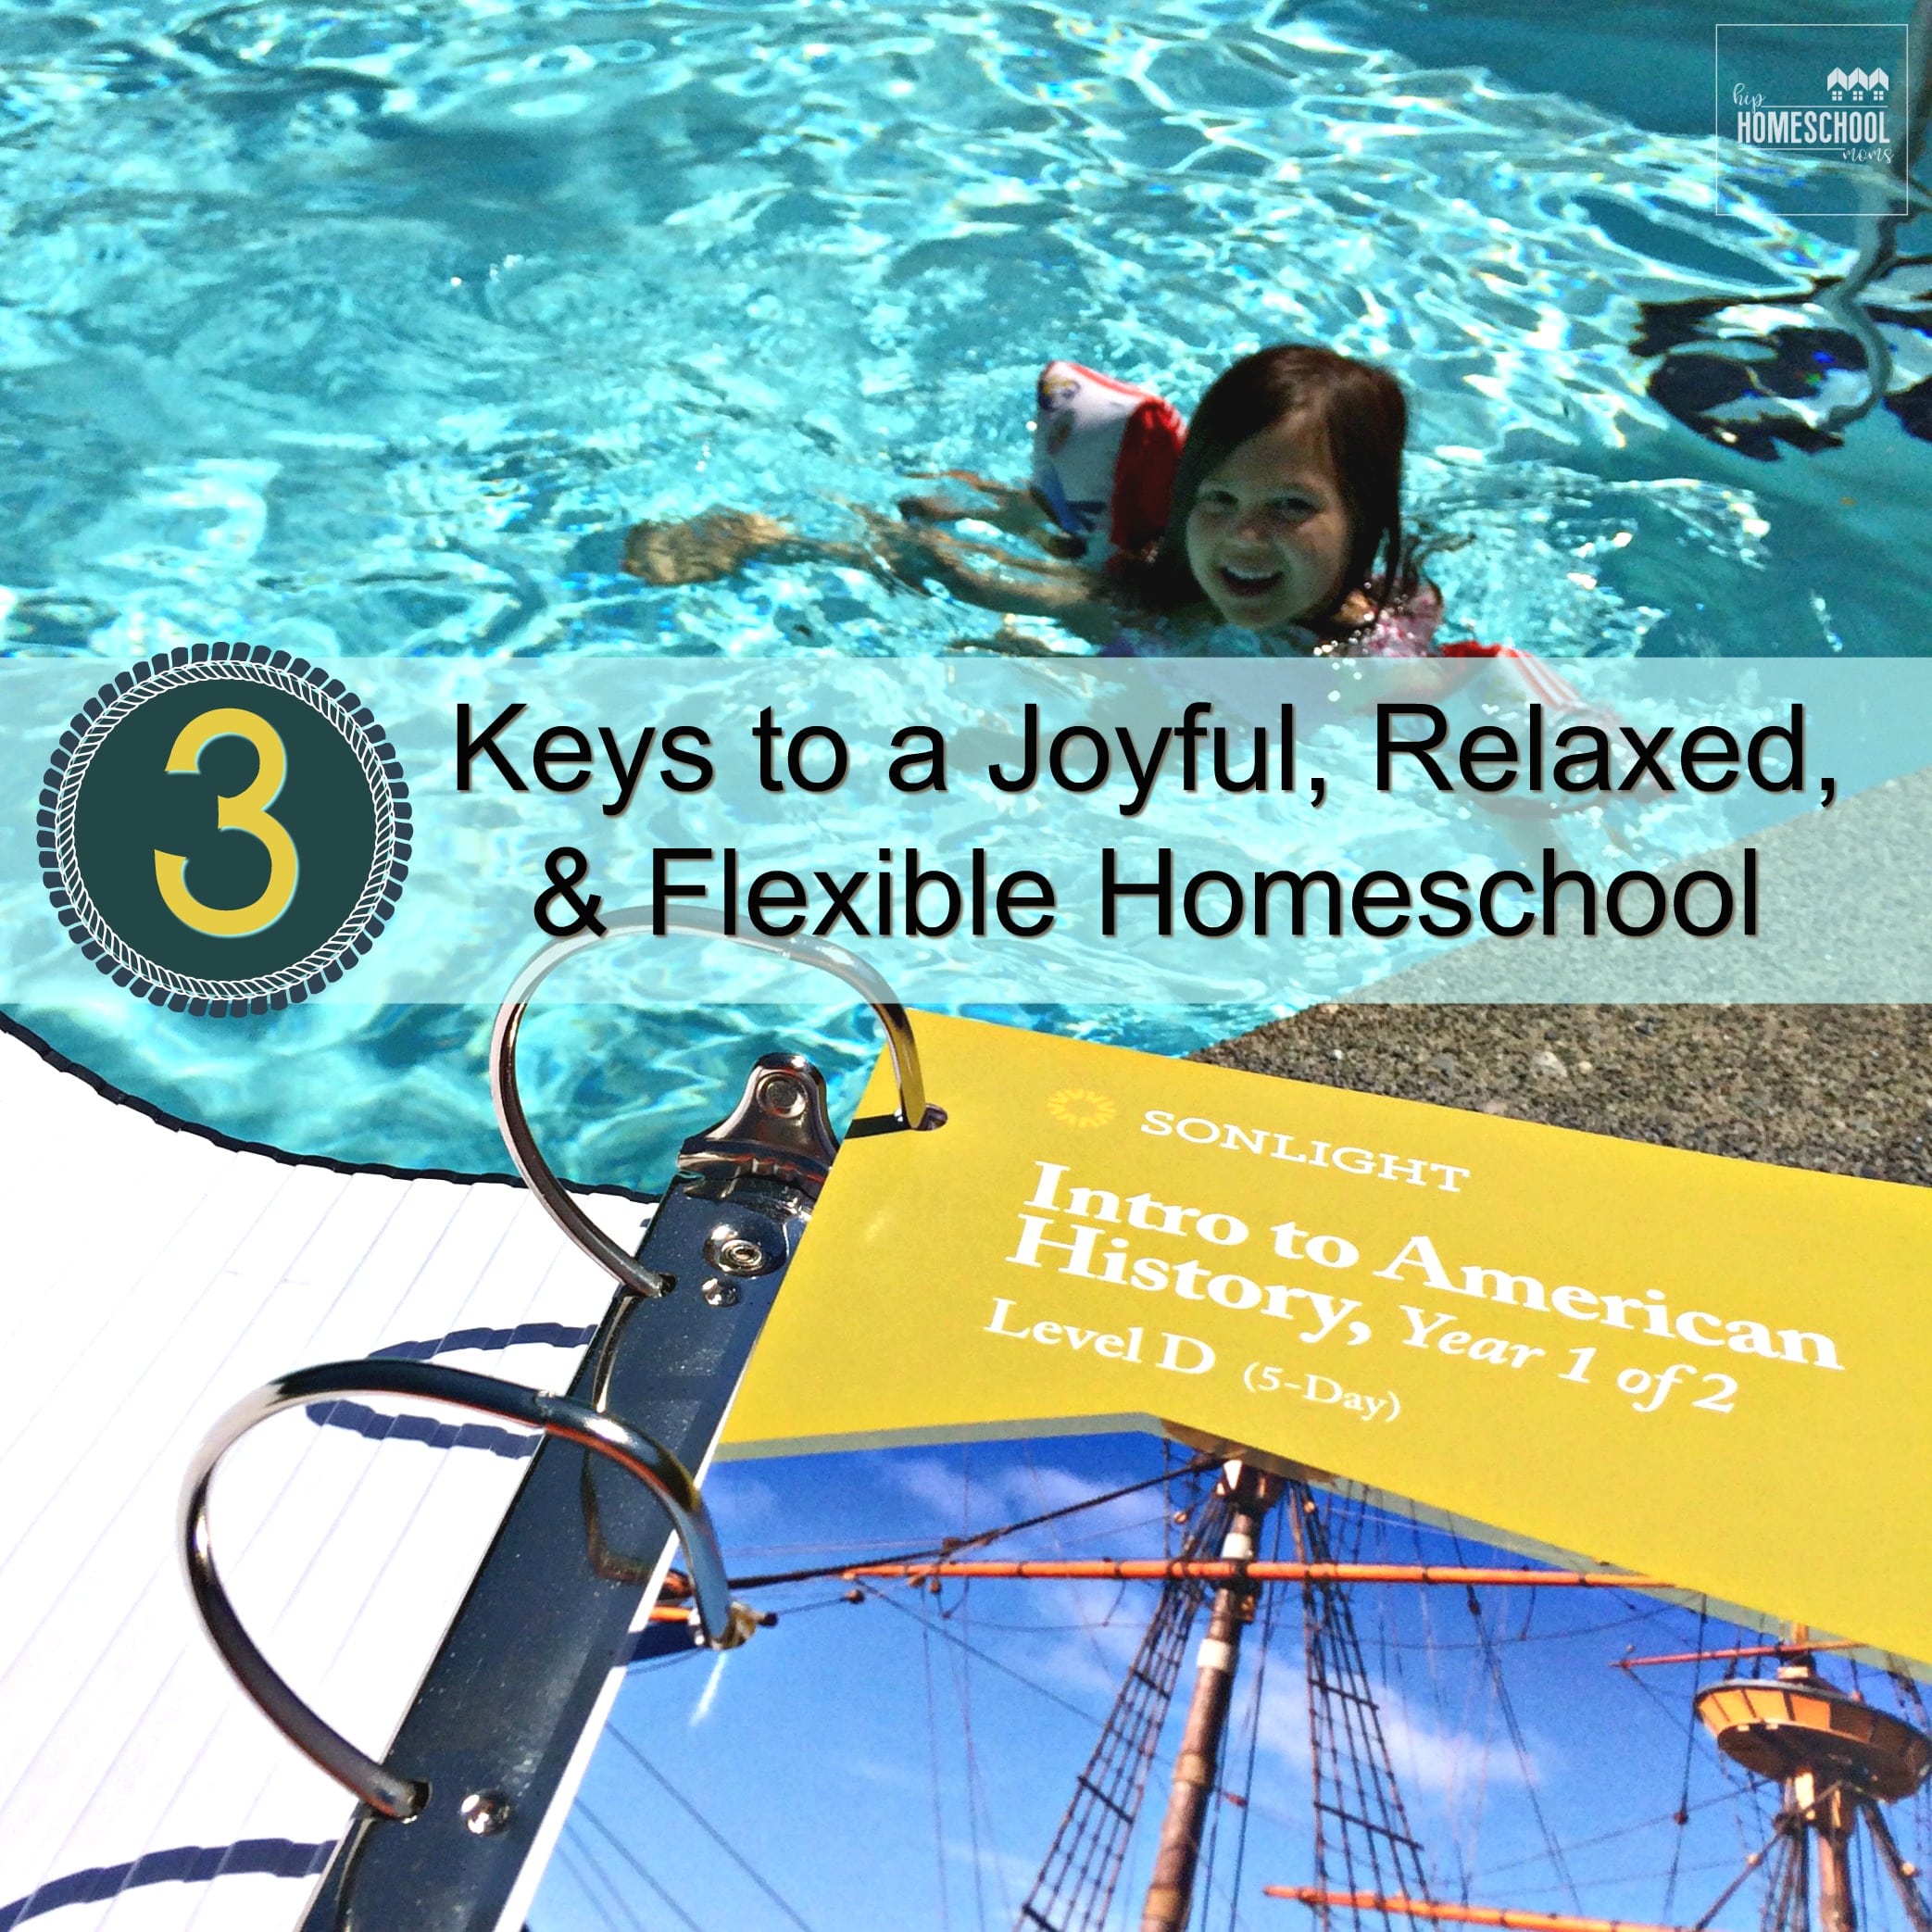 3 Keys to a Joyful, Relaxed & Flexible Homeschool